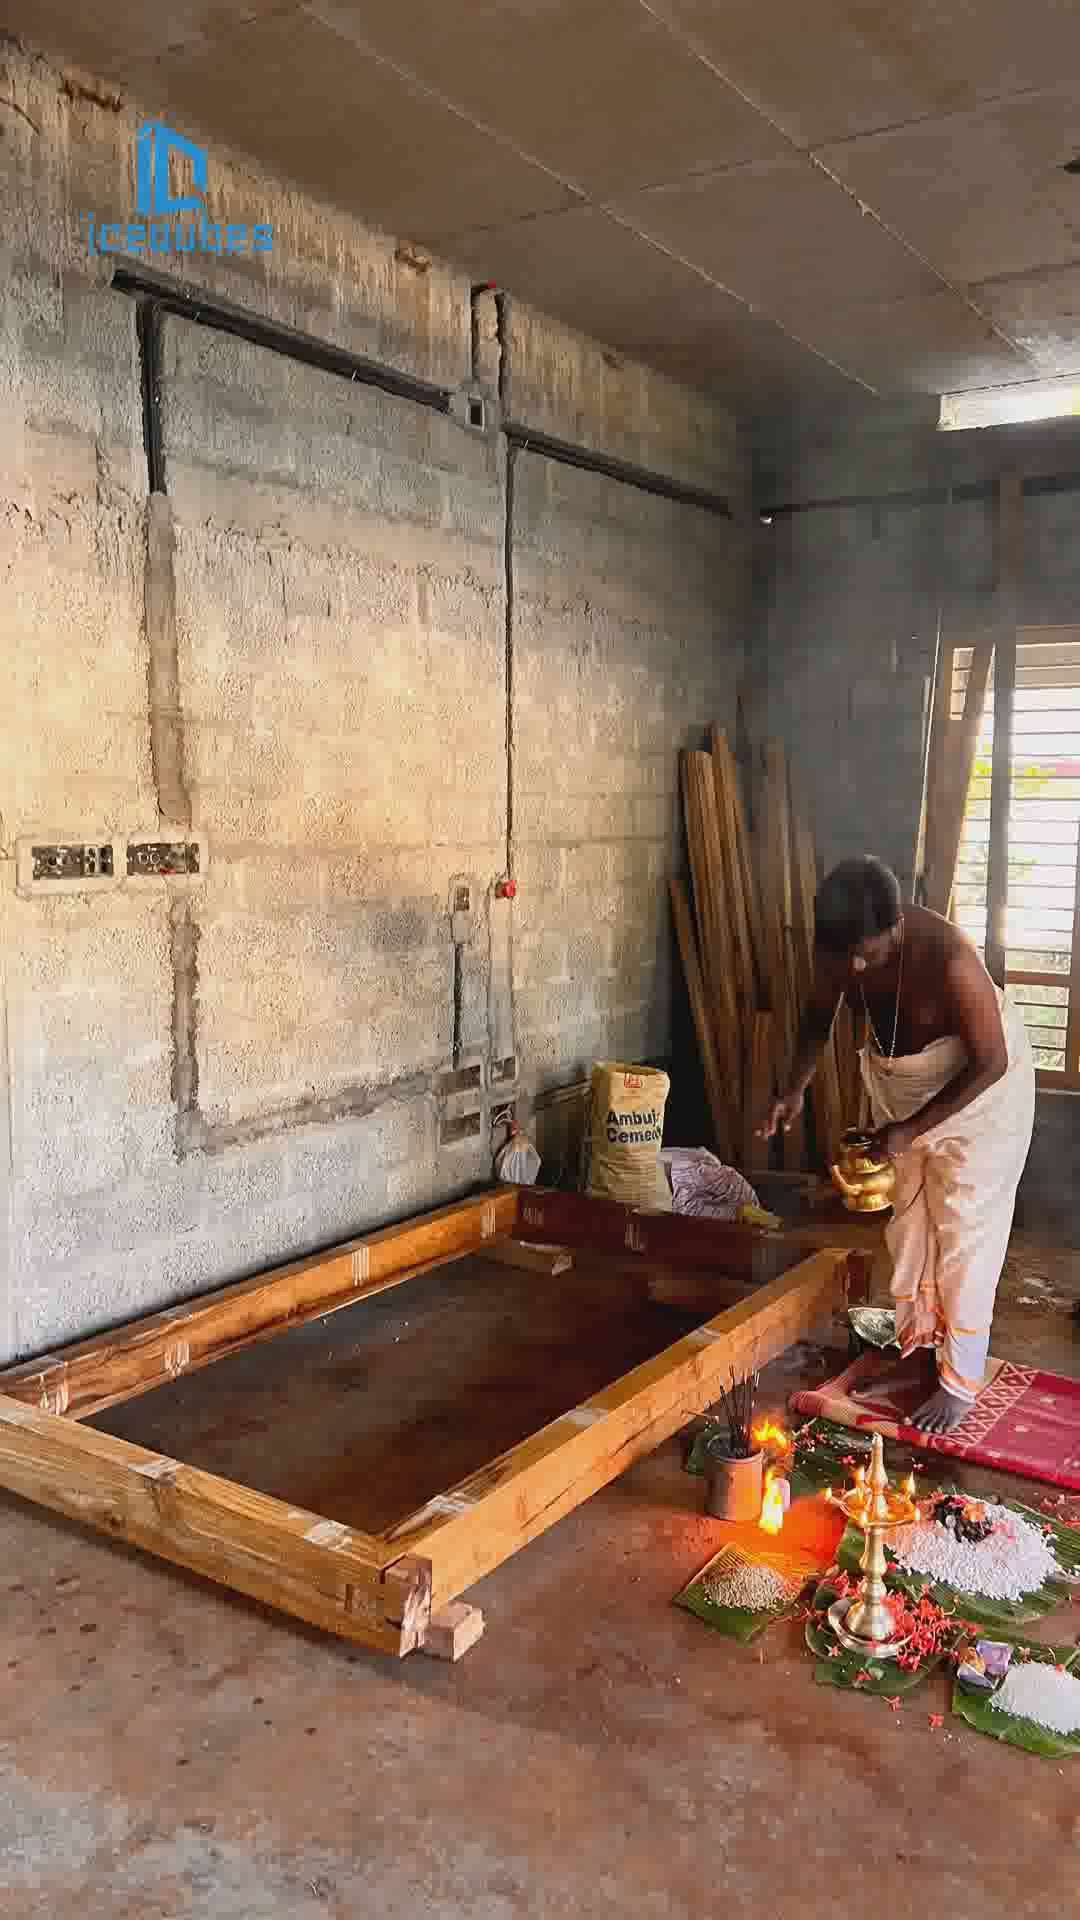 Kattla Vepp
#KeralaStyleHouse #TeakWoodDoors #Architect #veedu #HouseDesigns #_builders #civilcontractors #CivilEngineer #kochiinteriors #kerala_architecture #keralahomeplans #keralahomedesignz #kochi